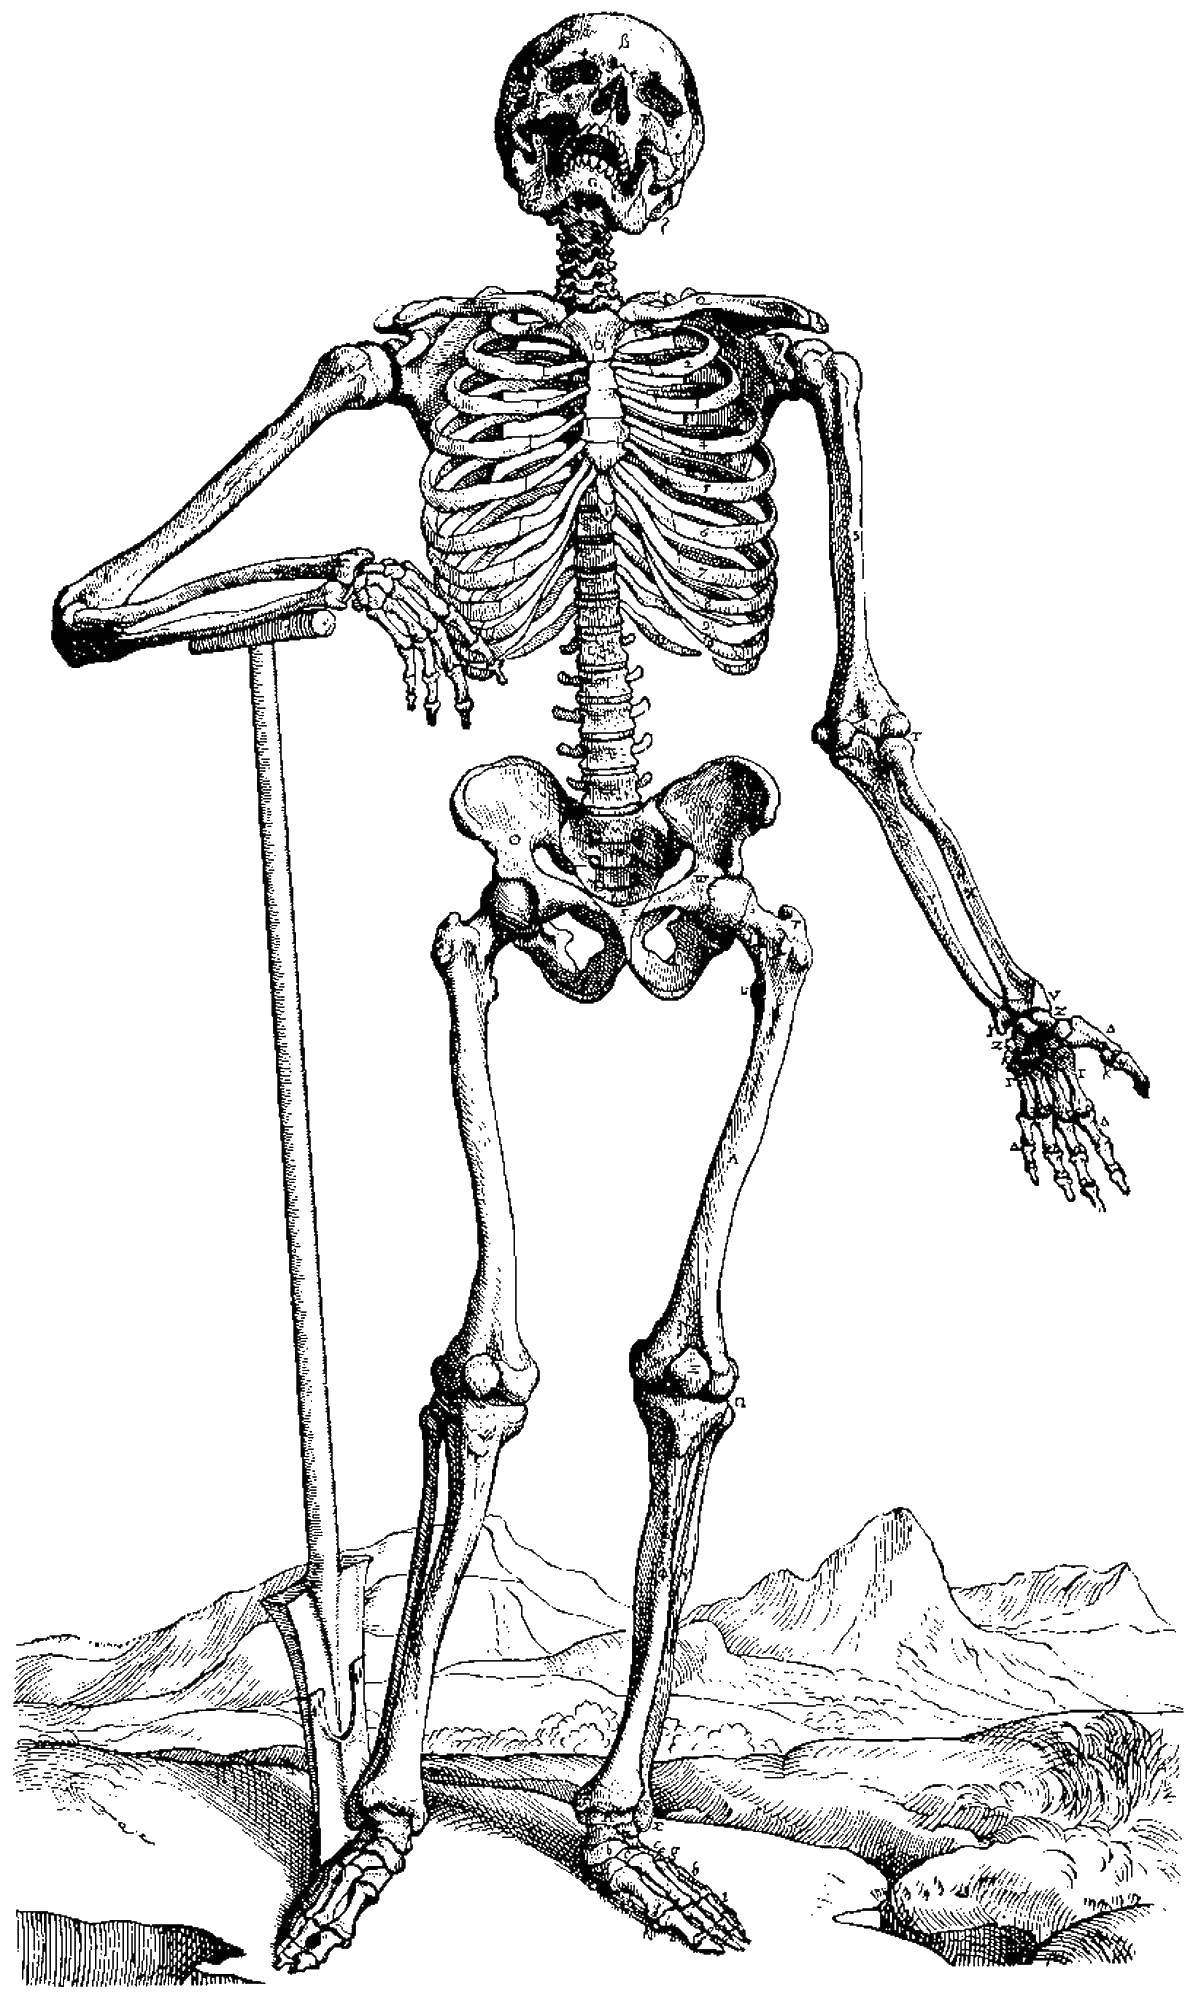 Coloring Skeleton. Category skeletons. Tags:  skeleton, bones.